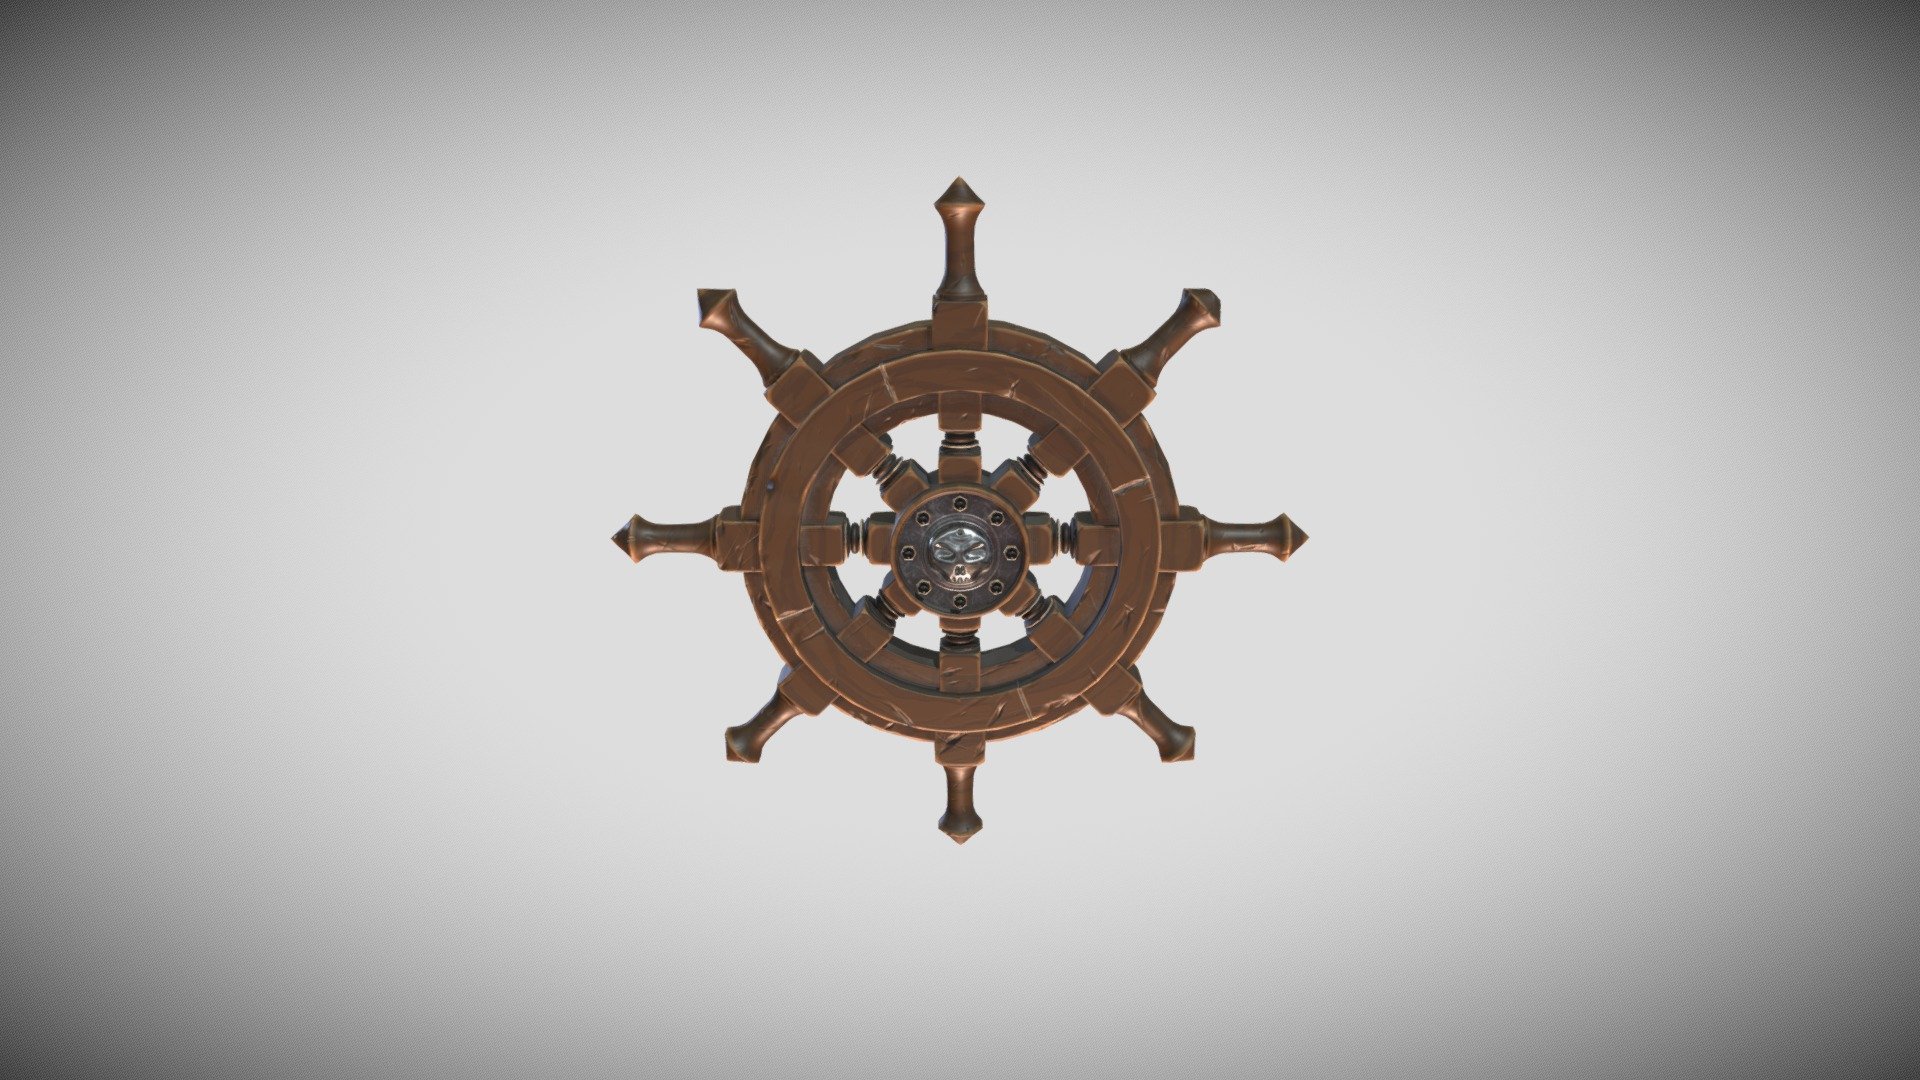 Stylized Pirate Ship's Wheel